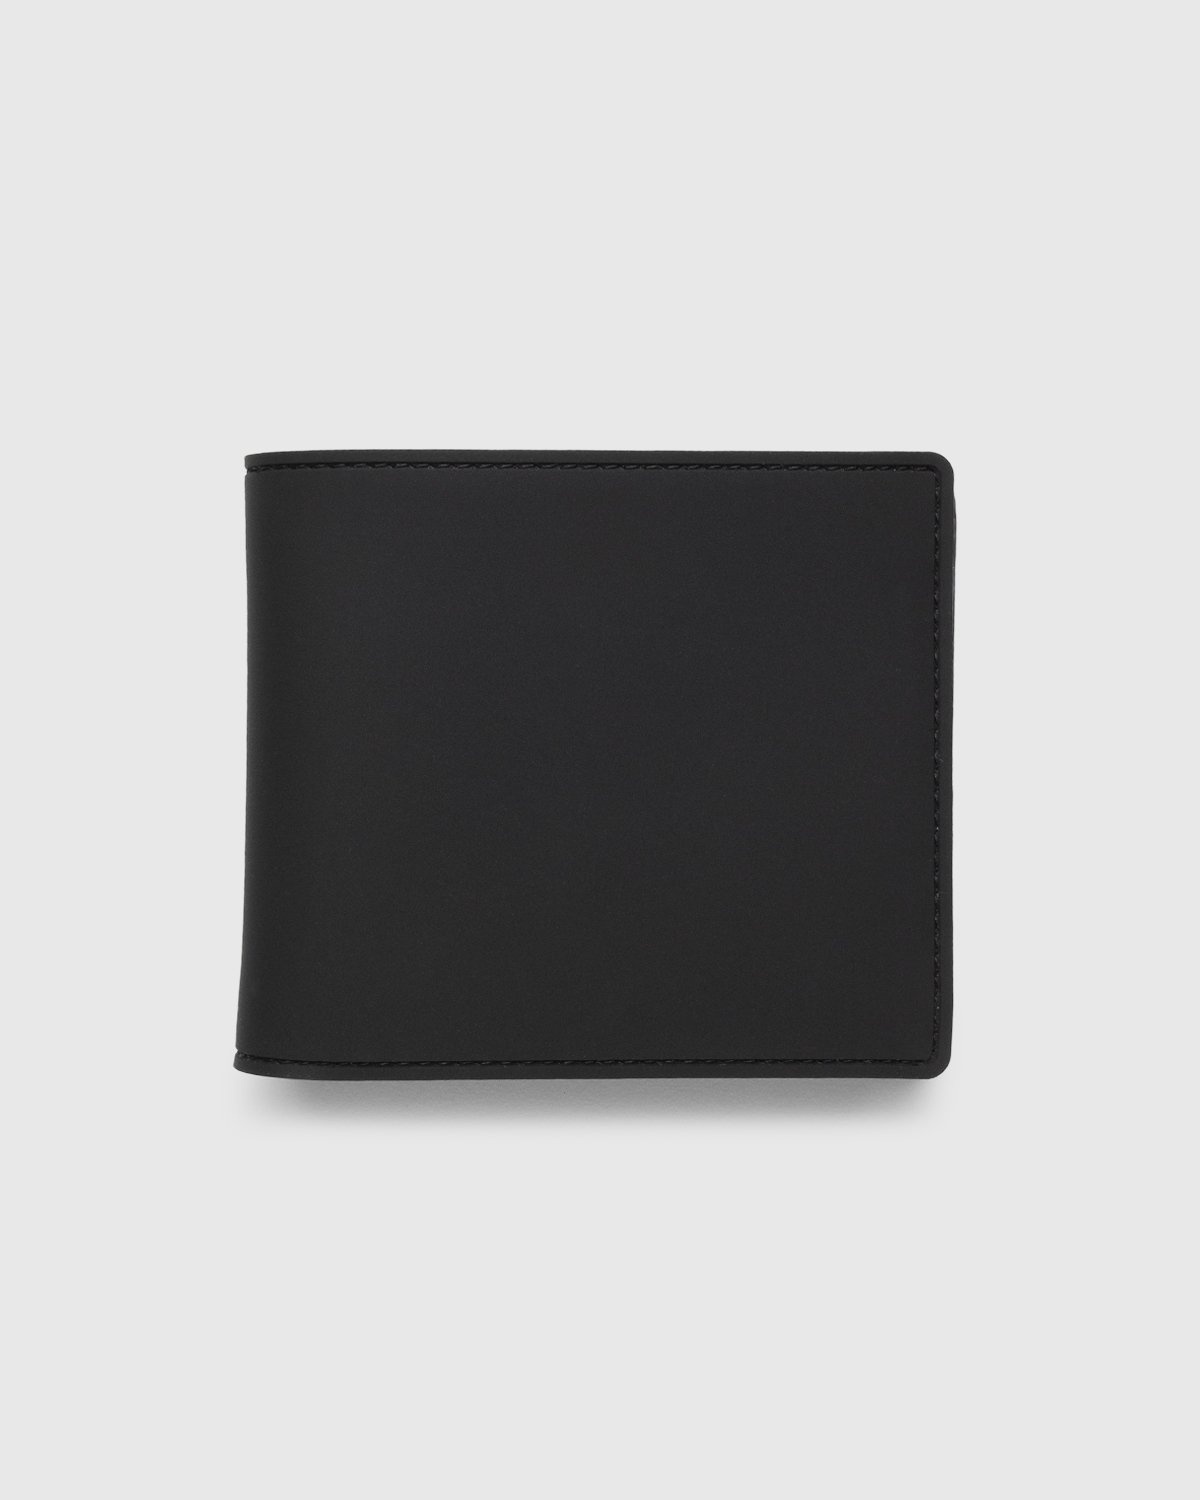 Maison Margiela – Bi-Fold Wallet Black | Highsnobiety Shop